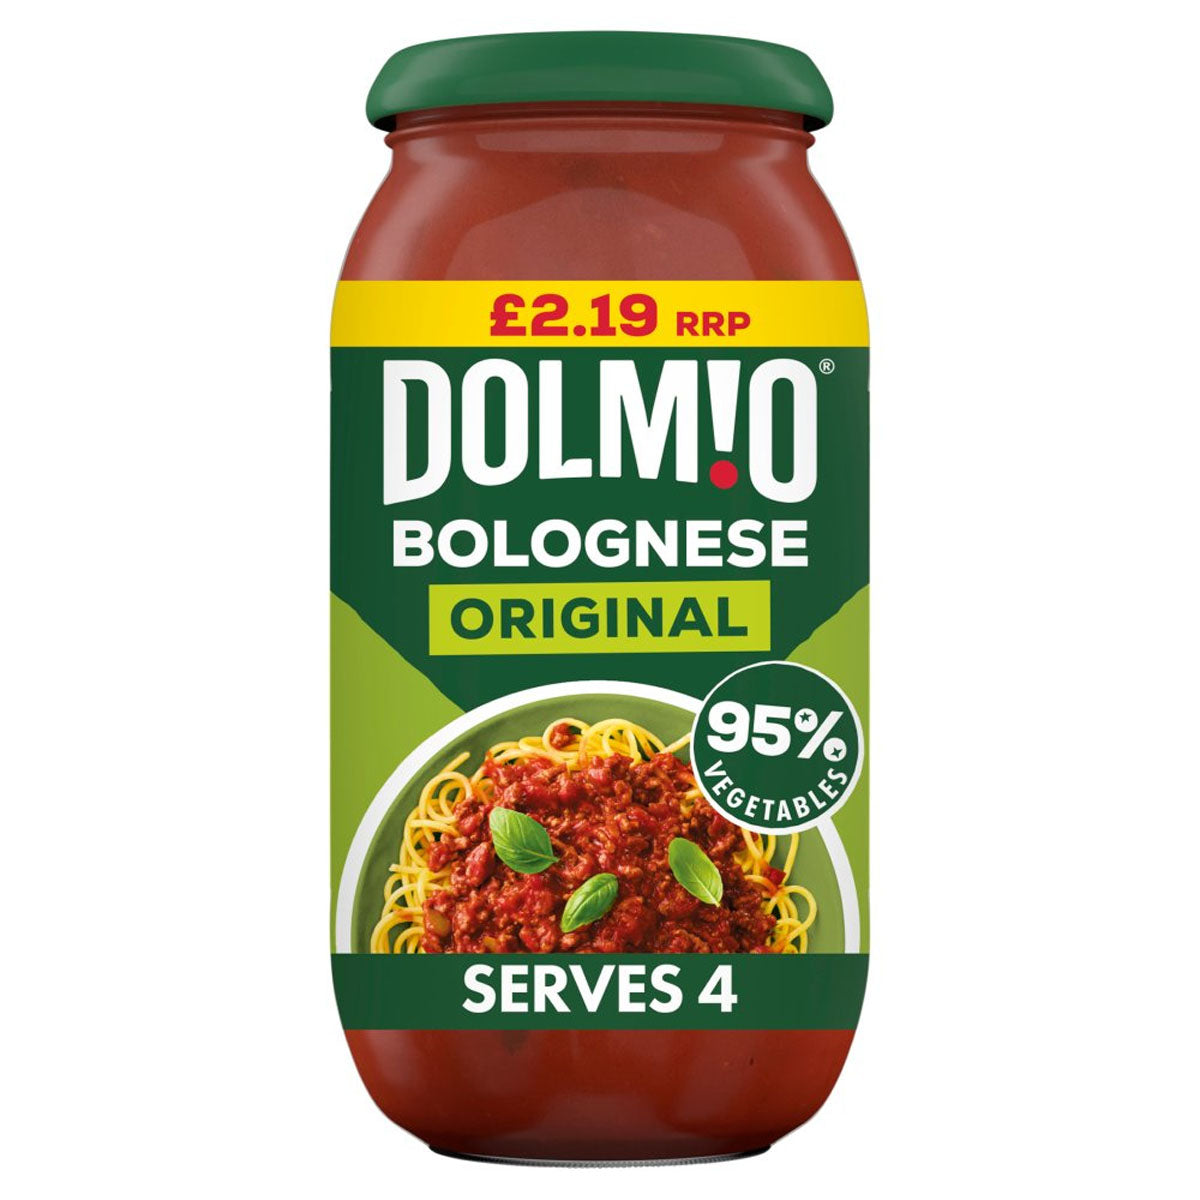 A jar of Dolmio - Bolognese Original Pasta Sauce - 500g.